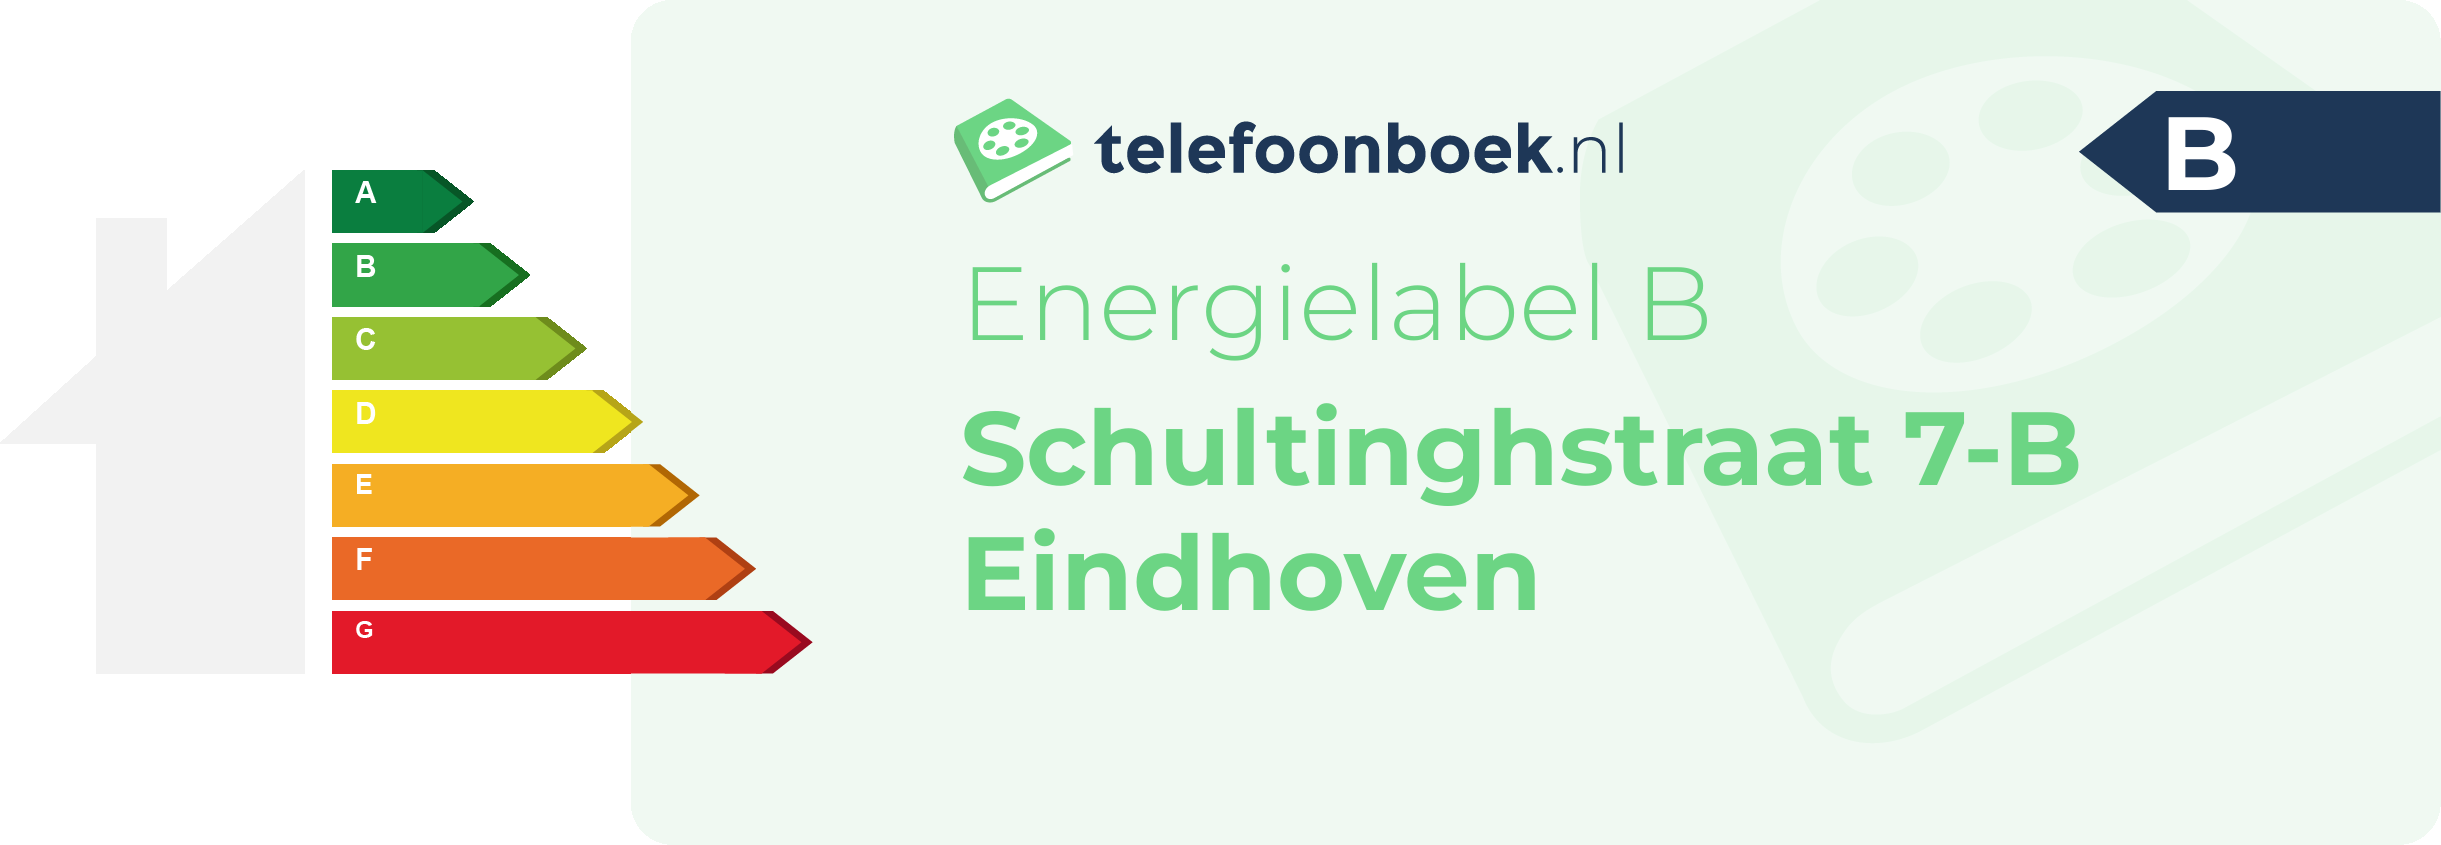 Energielabel Schultinghstraat 7-B Eindhoven